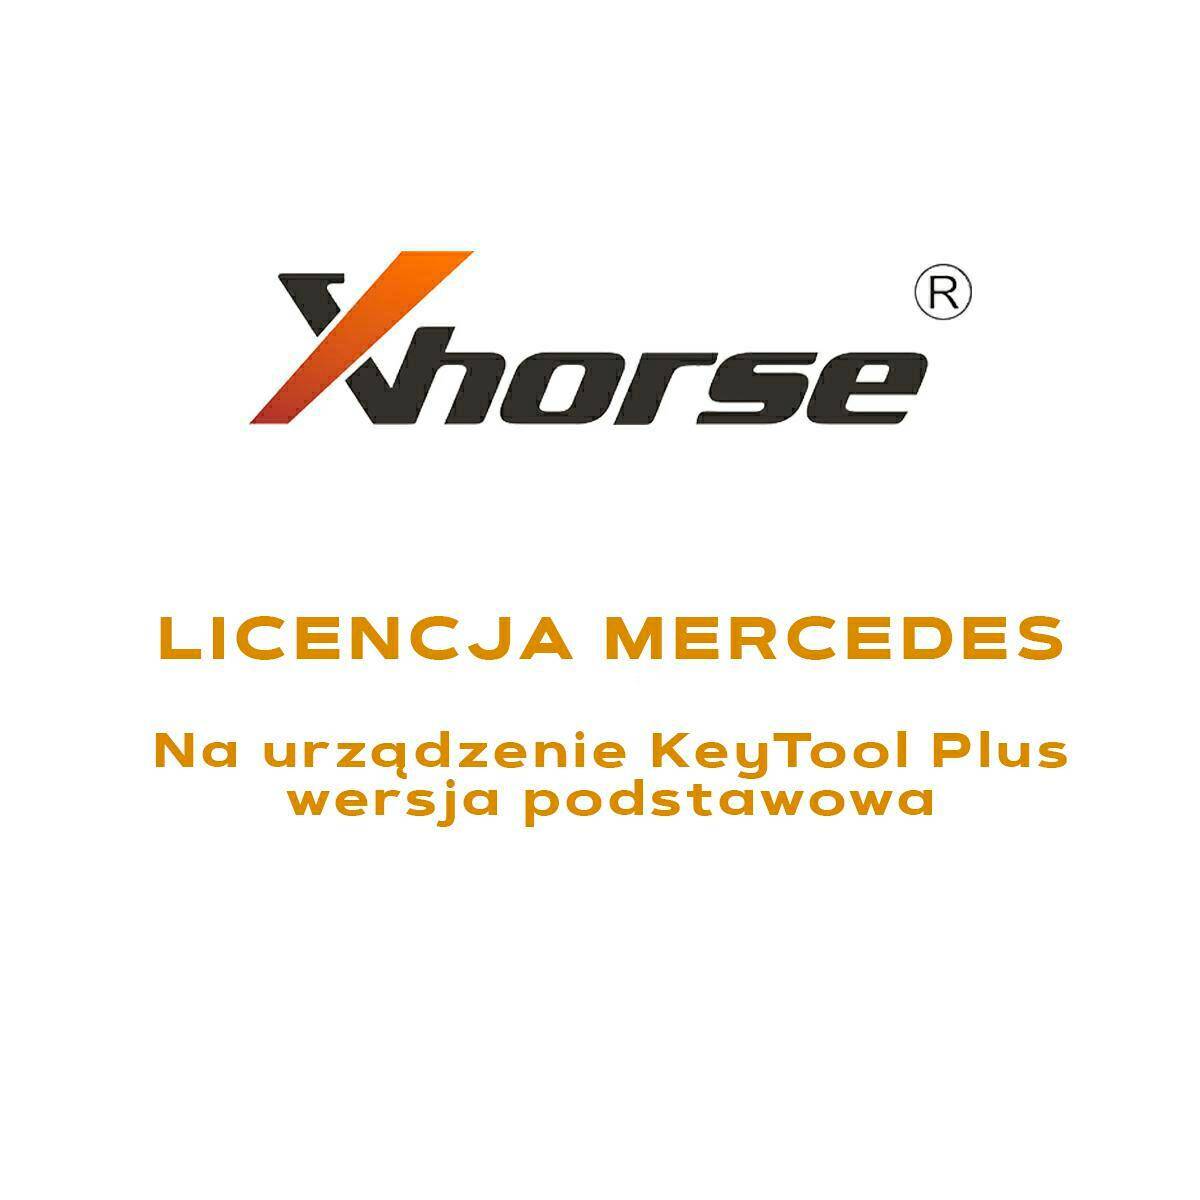 Key Tool Mercedes xHorse licence